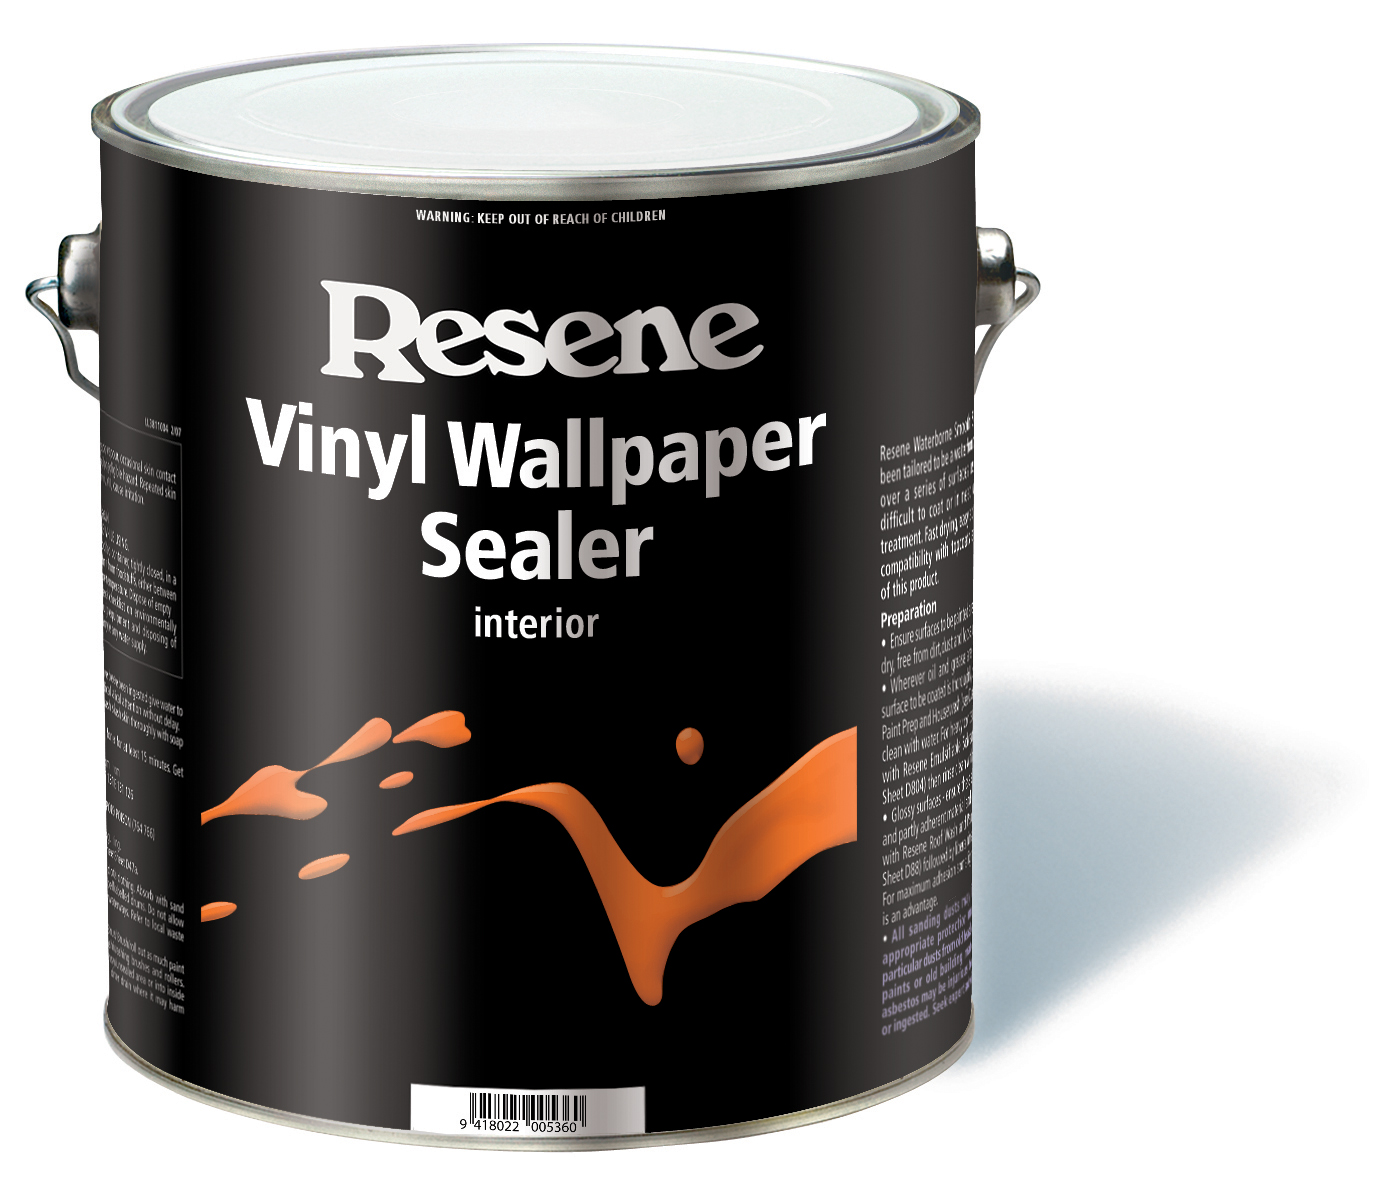 Resene Vinyl Wallpaper Sealer Product Shot Cmyk And Rgb S